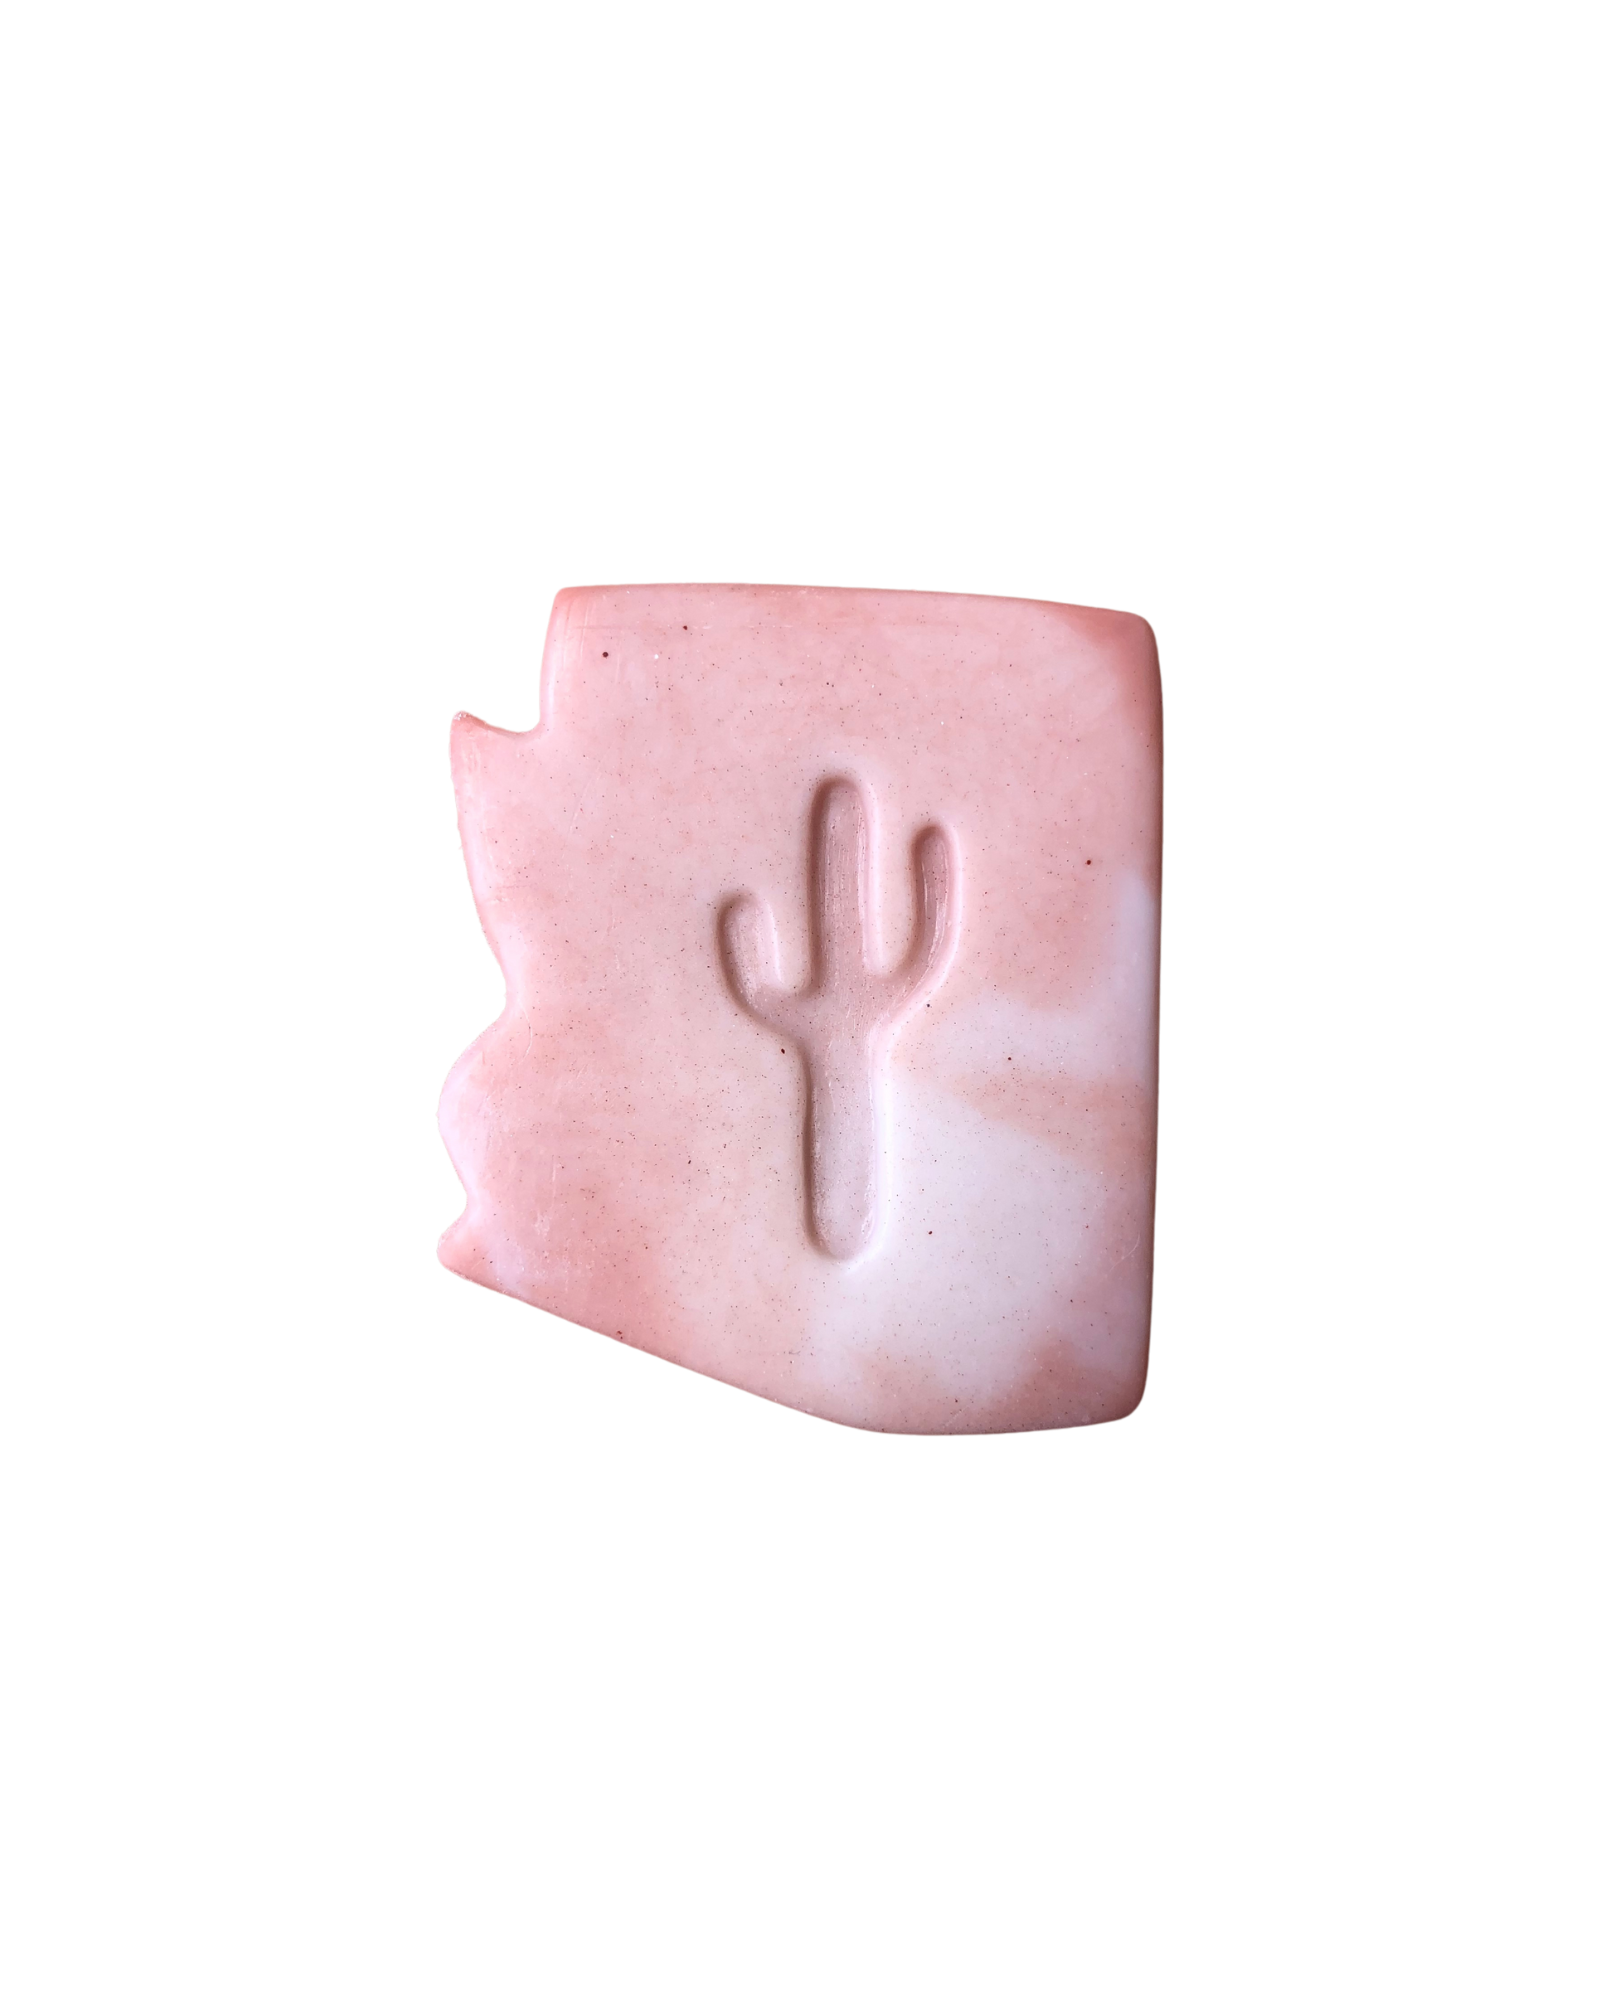 Pink and white swirled arizona shaped soap with saguaro cactus design